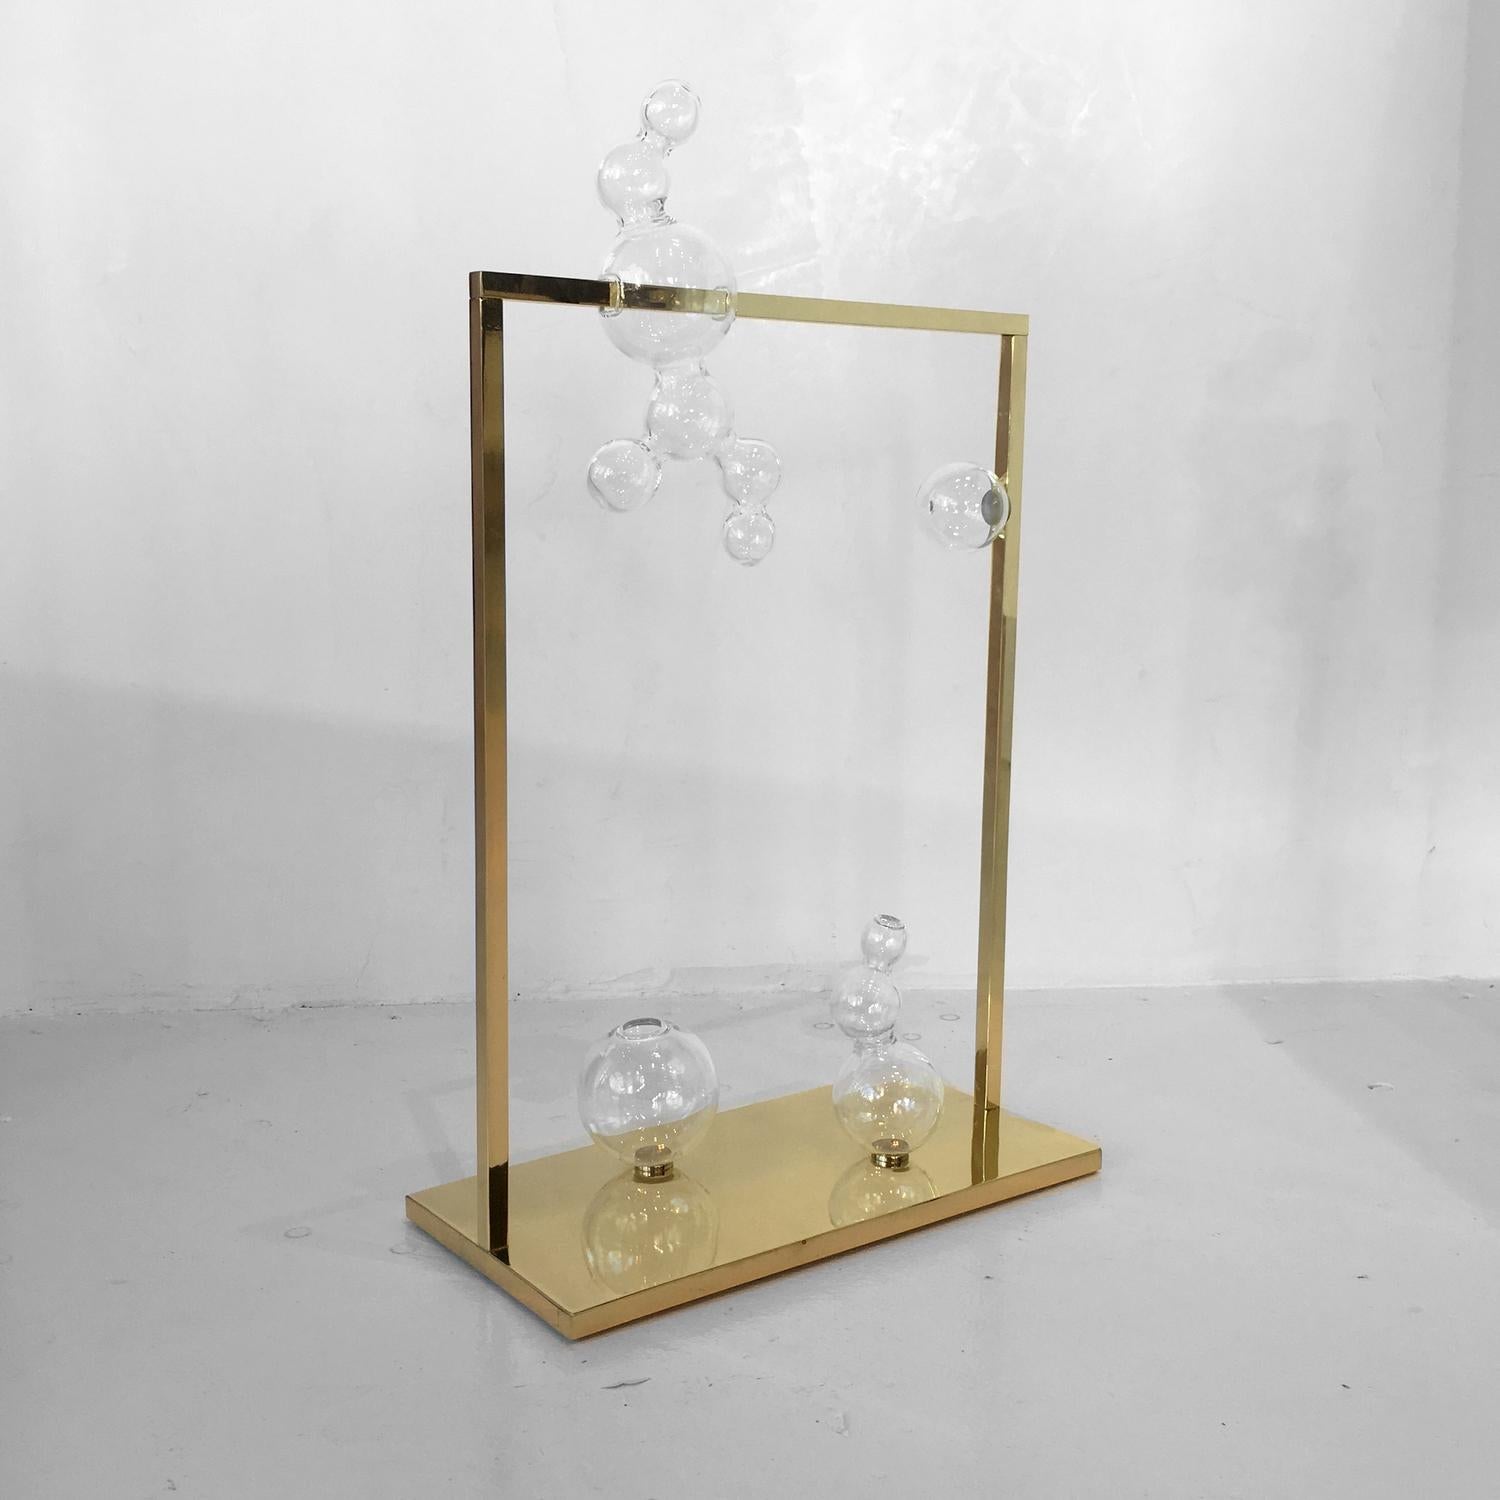 Atelier Simone Crestani, tall bubble vase glass sculpture.
 
Made in: Italy
Designed by Simone Crestani